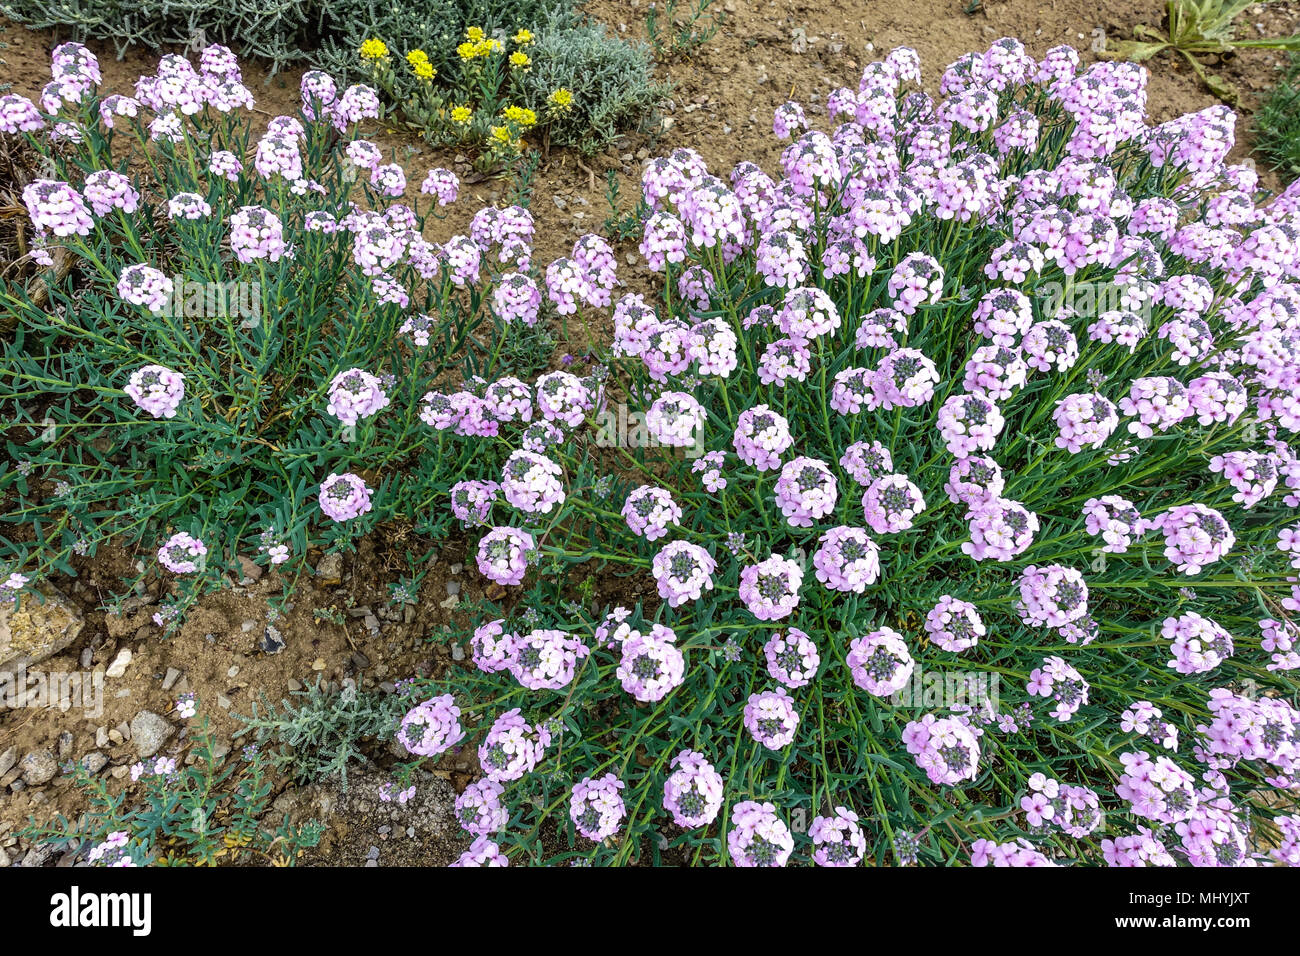 Aethionema schistosum. Fragrant Persian Stonecress or Turkish stonecress ground cover plants Stock Photo